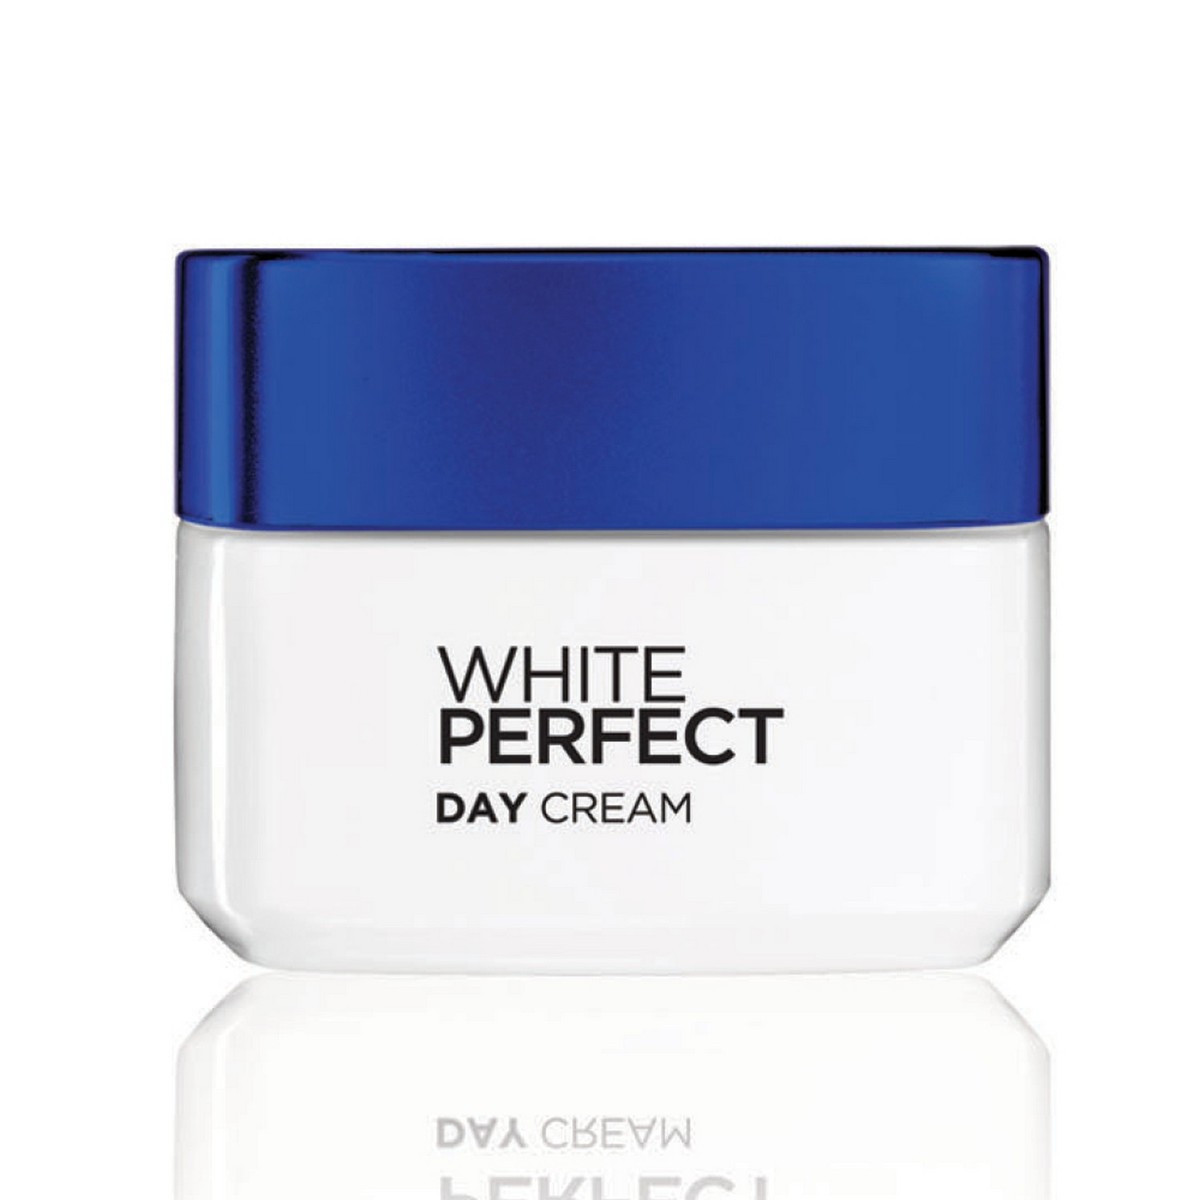 L'Oreal Paris Skin Care White Perfect Fairness Control Moisturizing Cream Day Spf 17, 50 ml